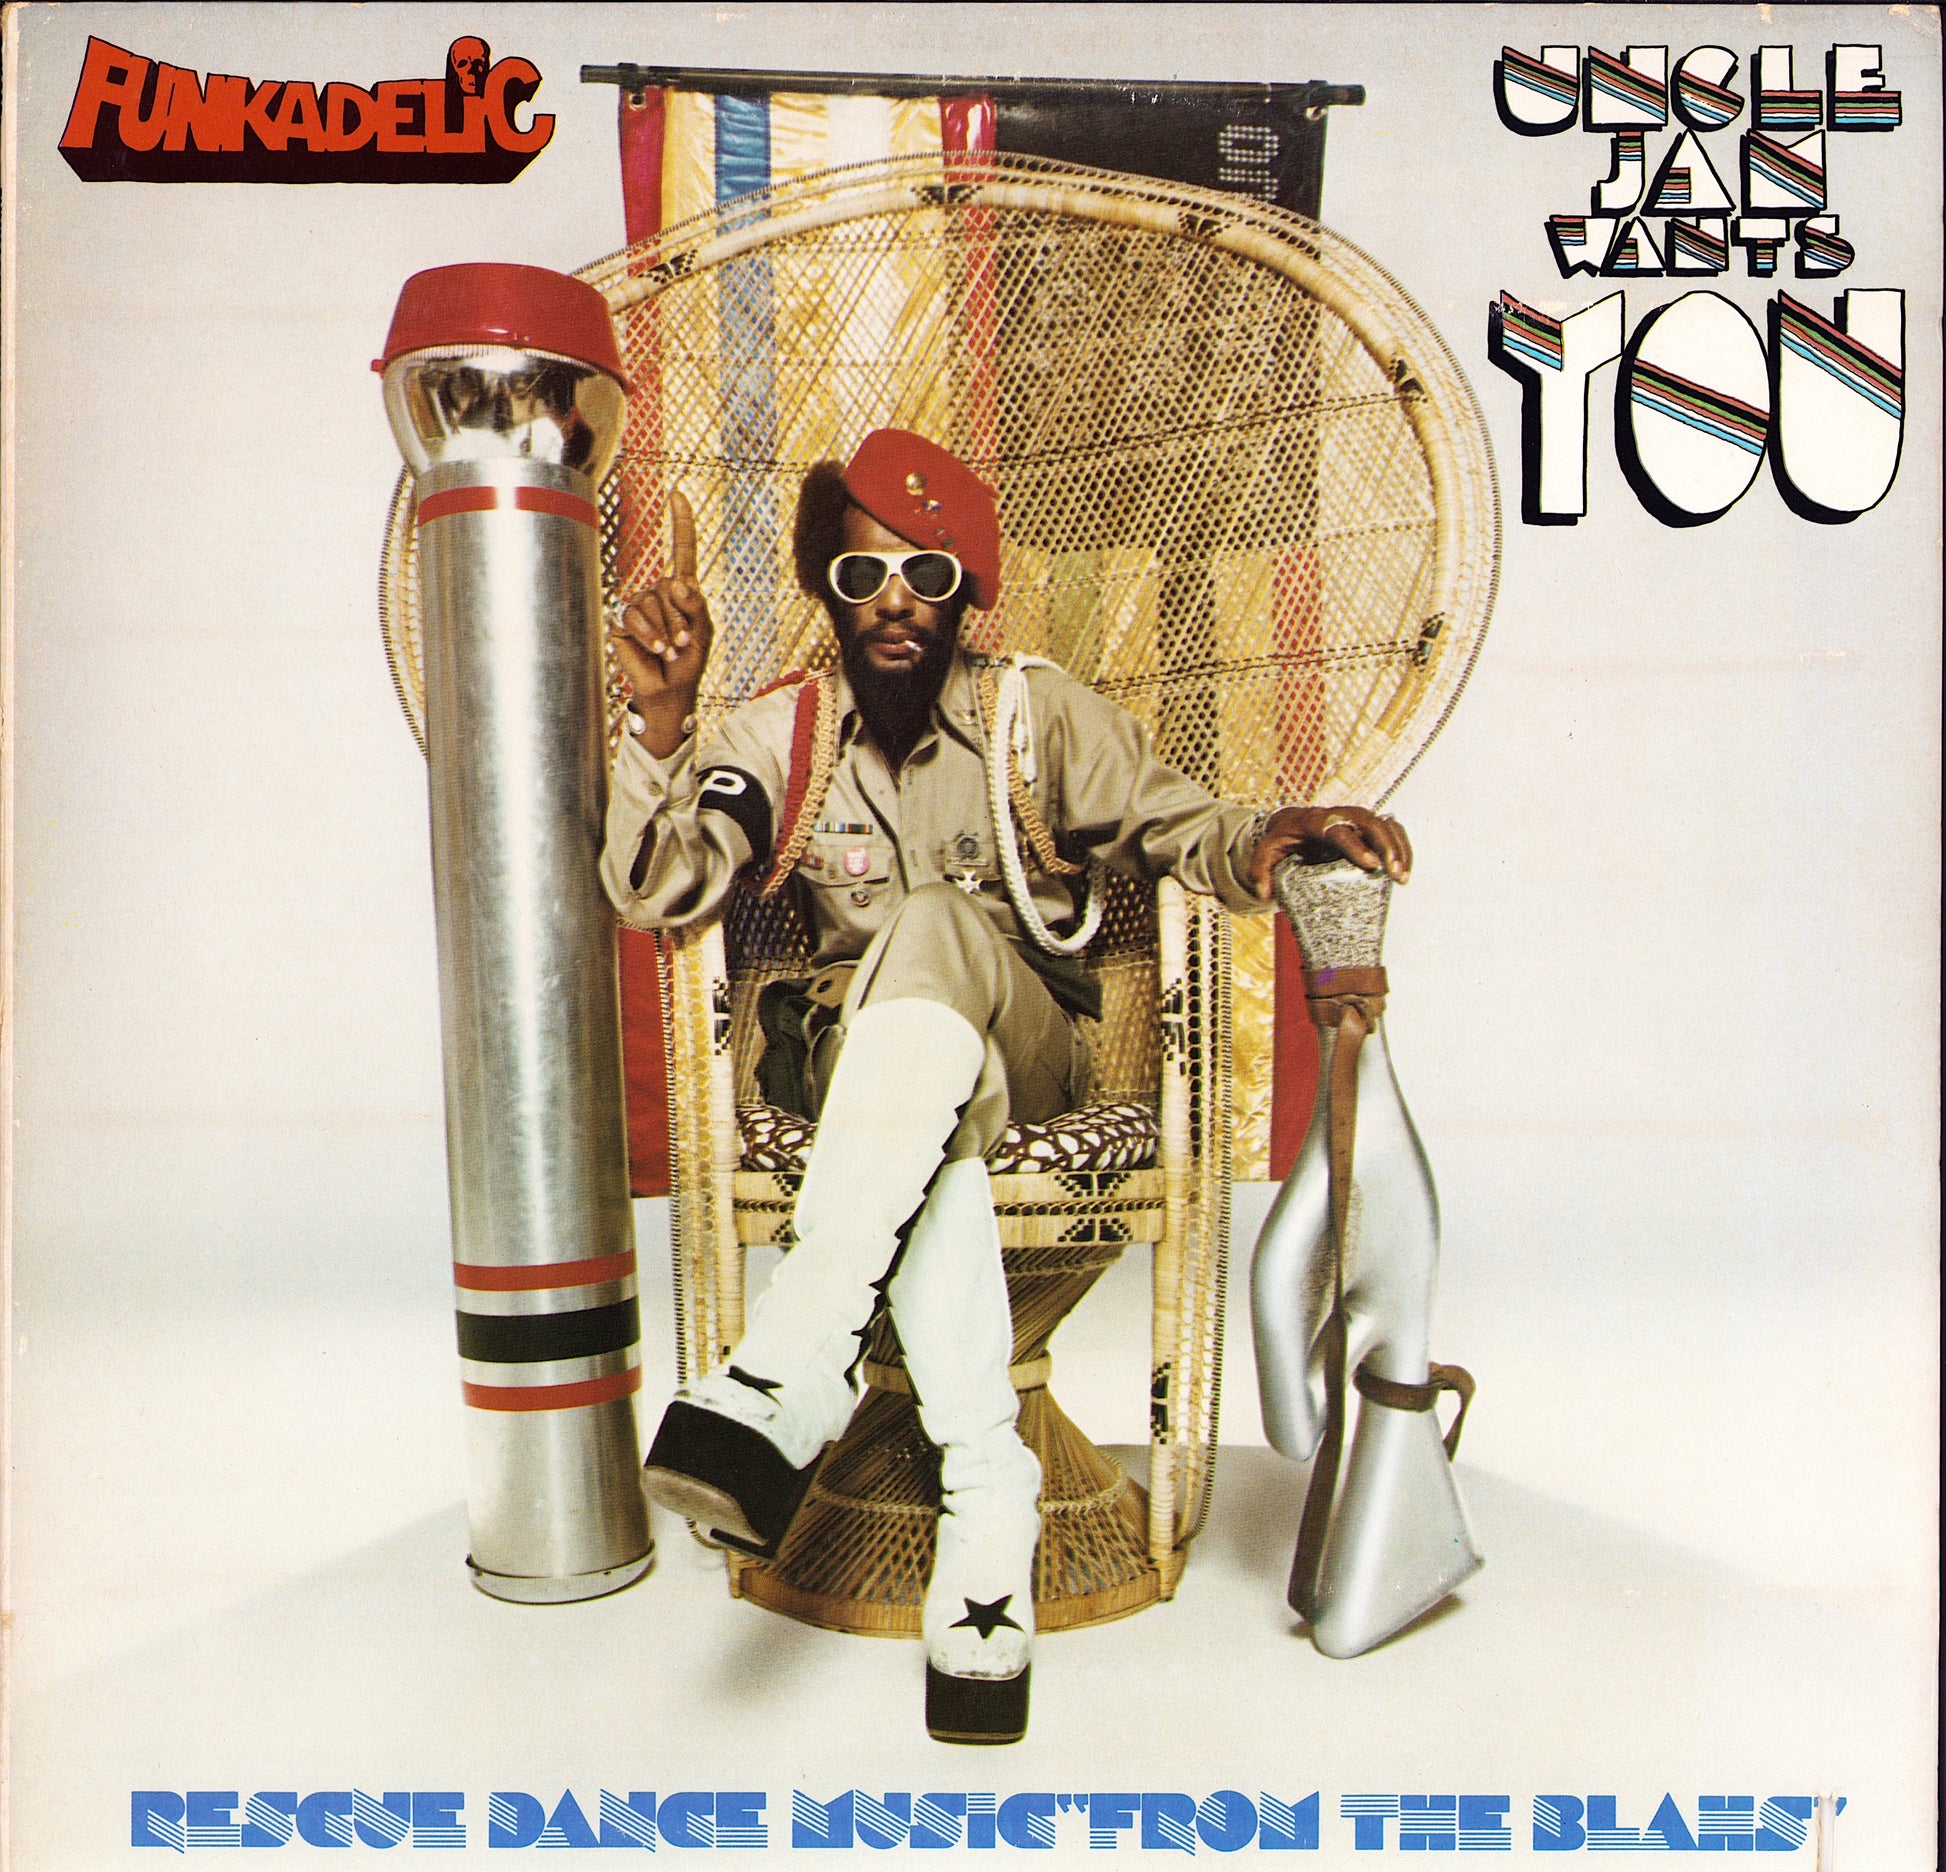 Funkadelic - Uncle Jam Wants You Vinyl LP